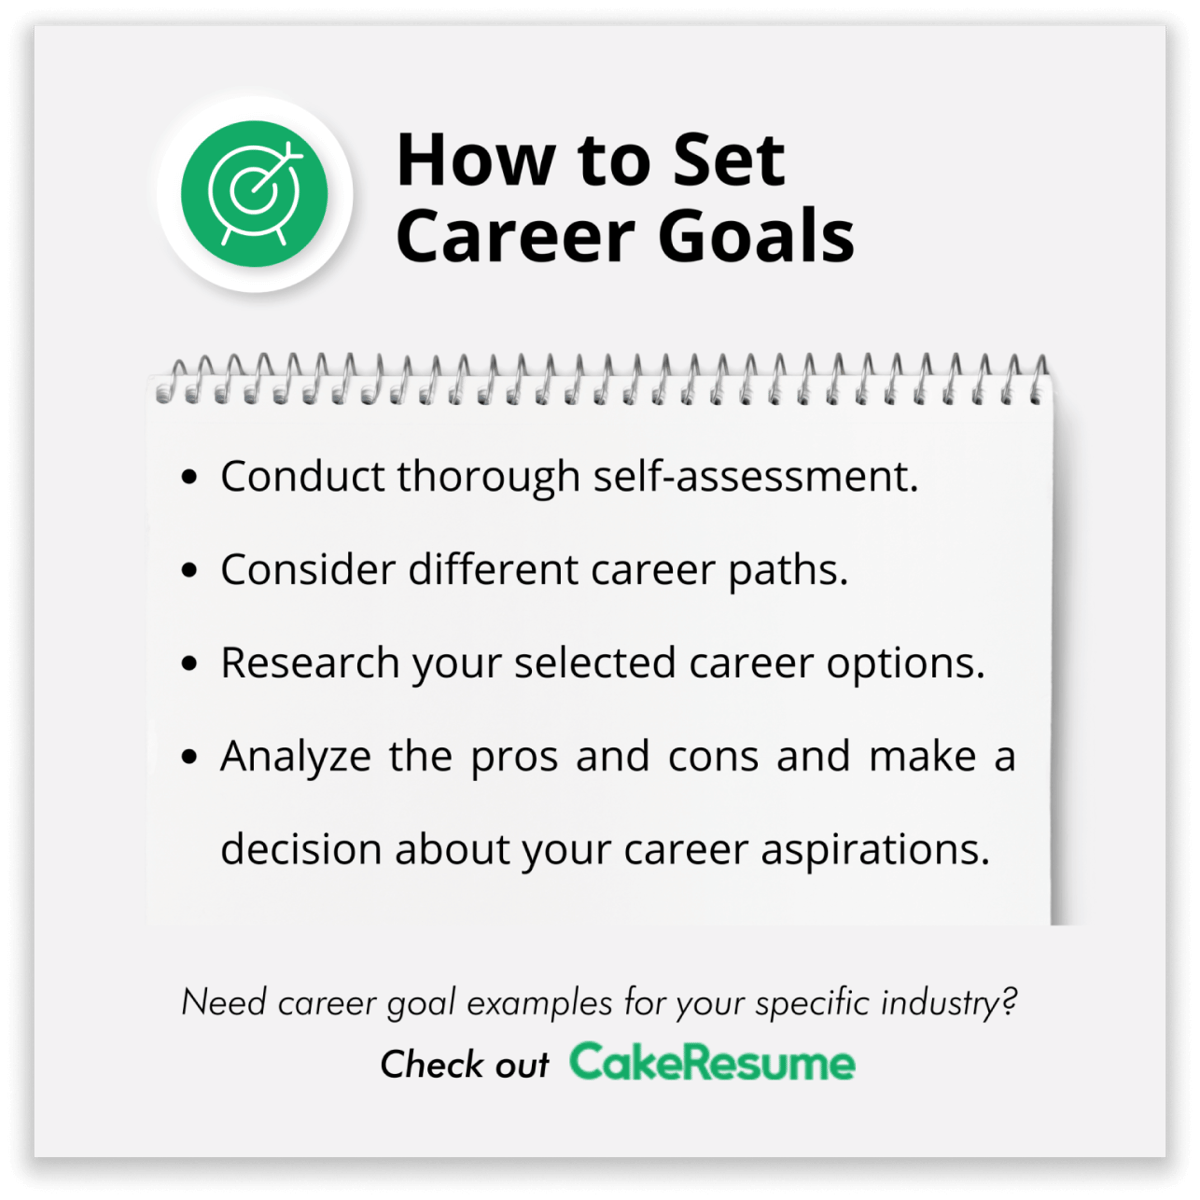 How to Set Career Goals